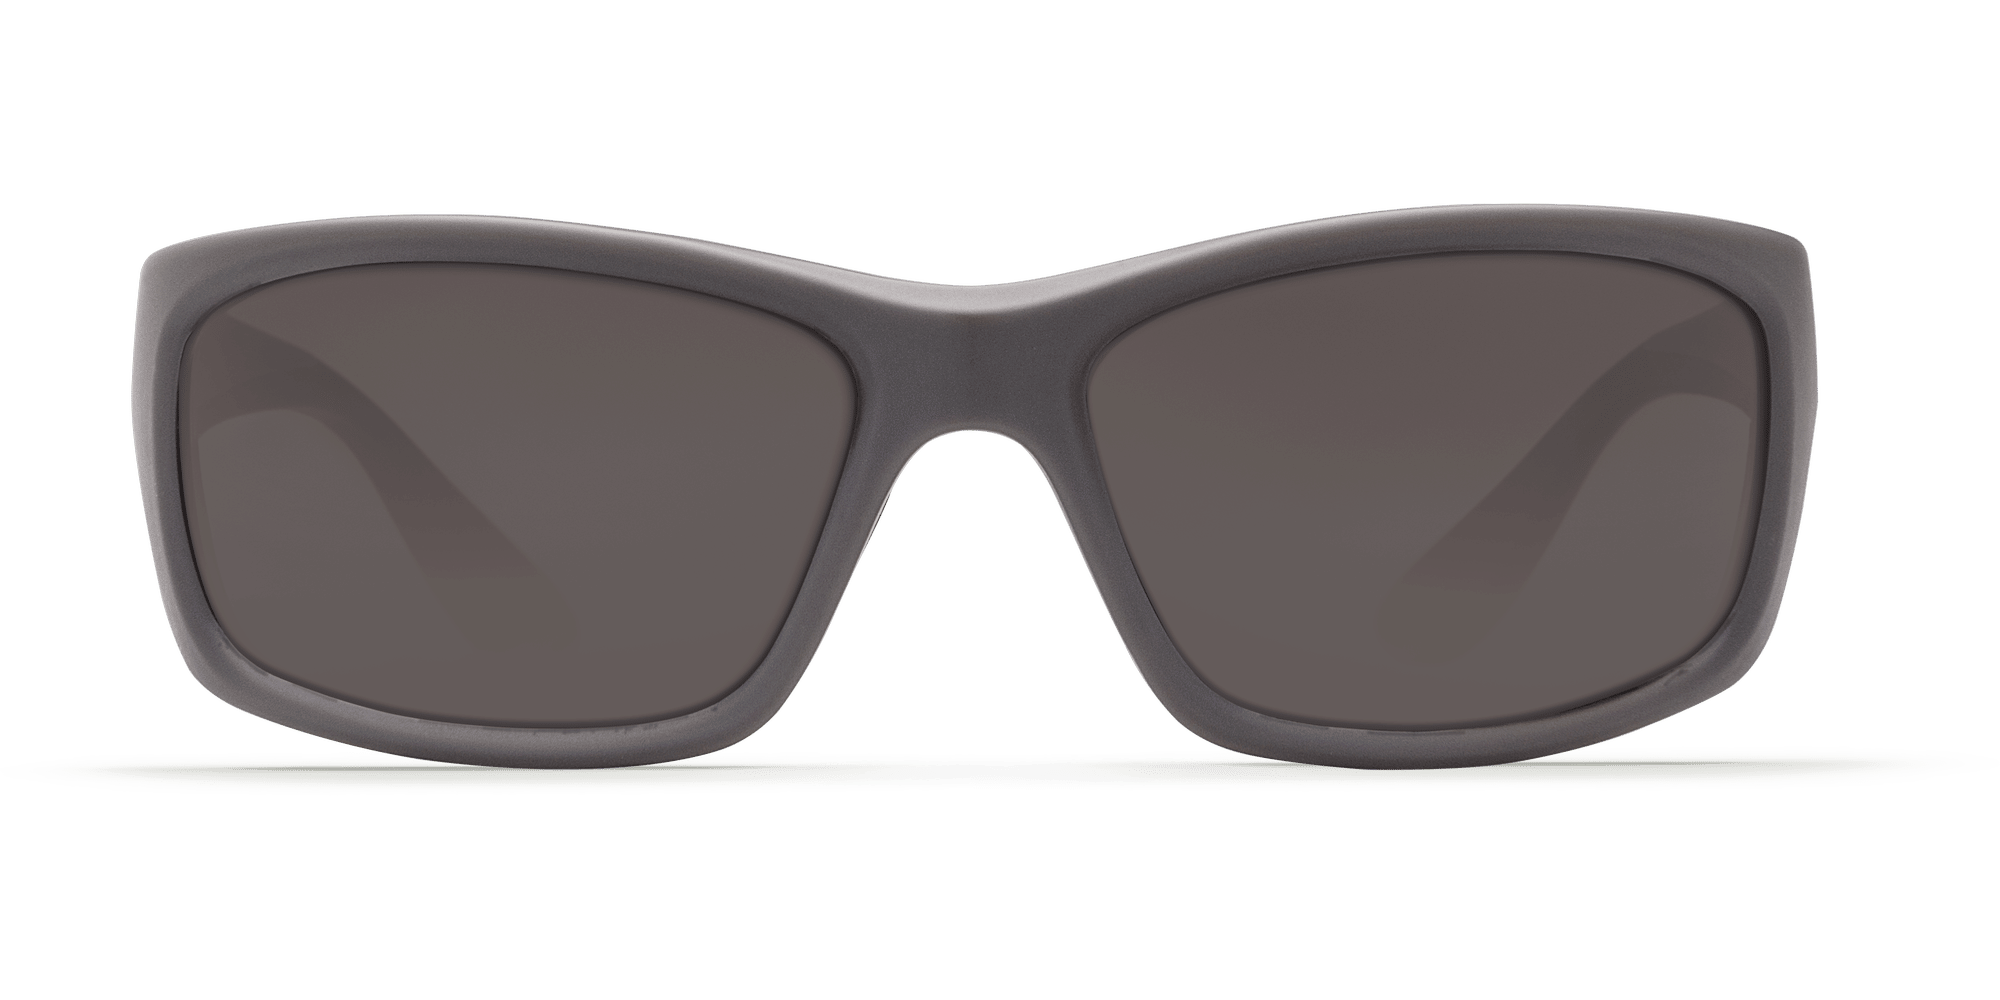 Costa Jose Sunglasses - SafetyGearPro.com - #1 Online Safety Equipment ...